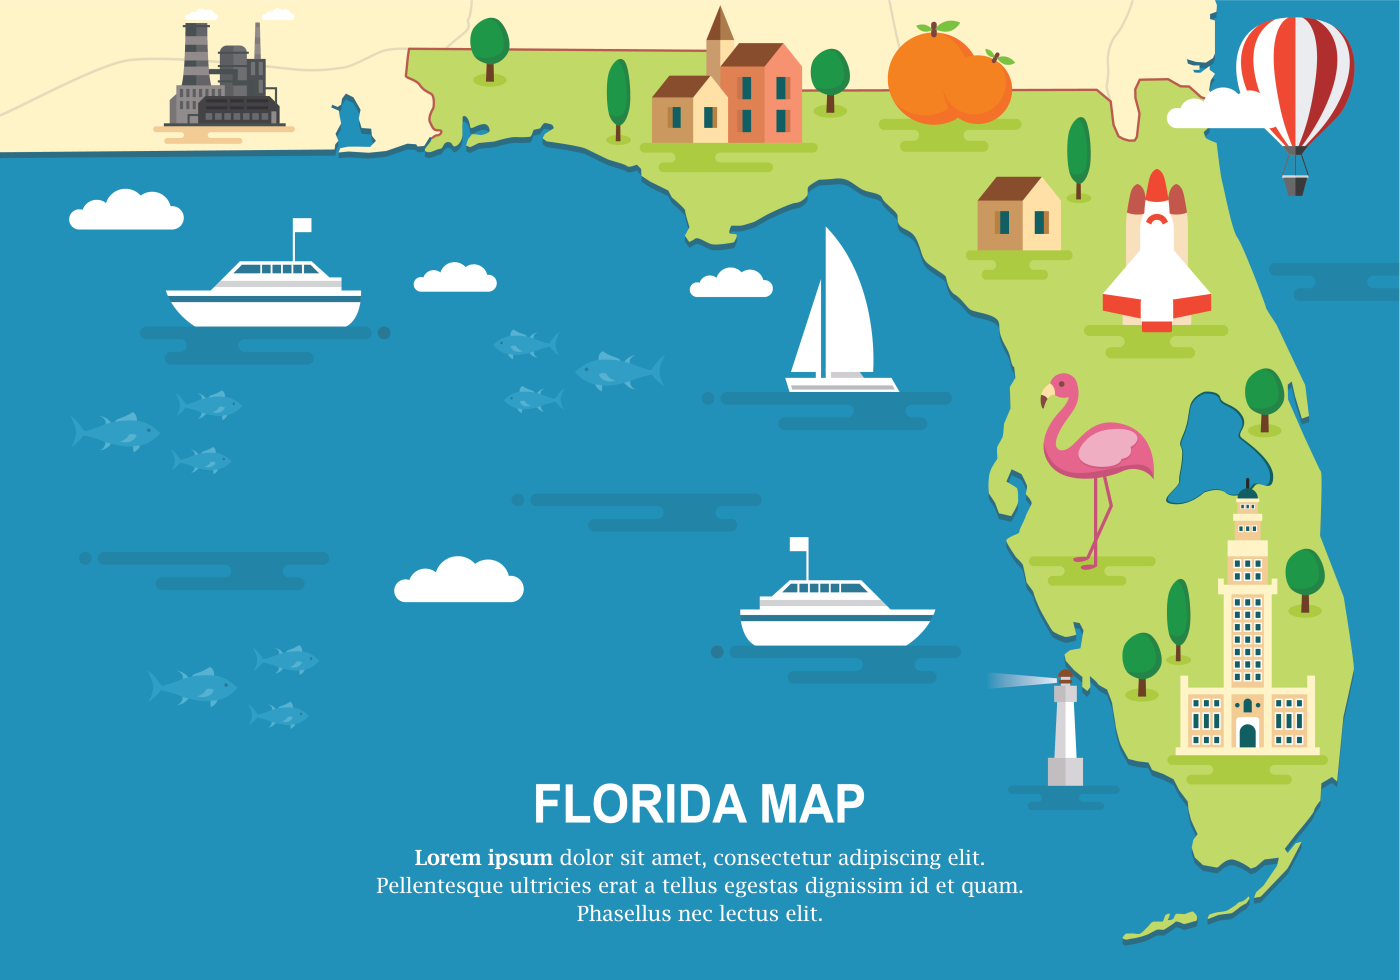 Florida Map In Adobe Illustrator Vector Format Detail - vrogue.co